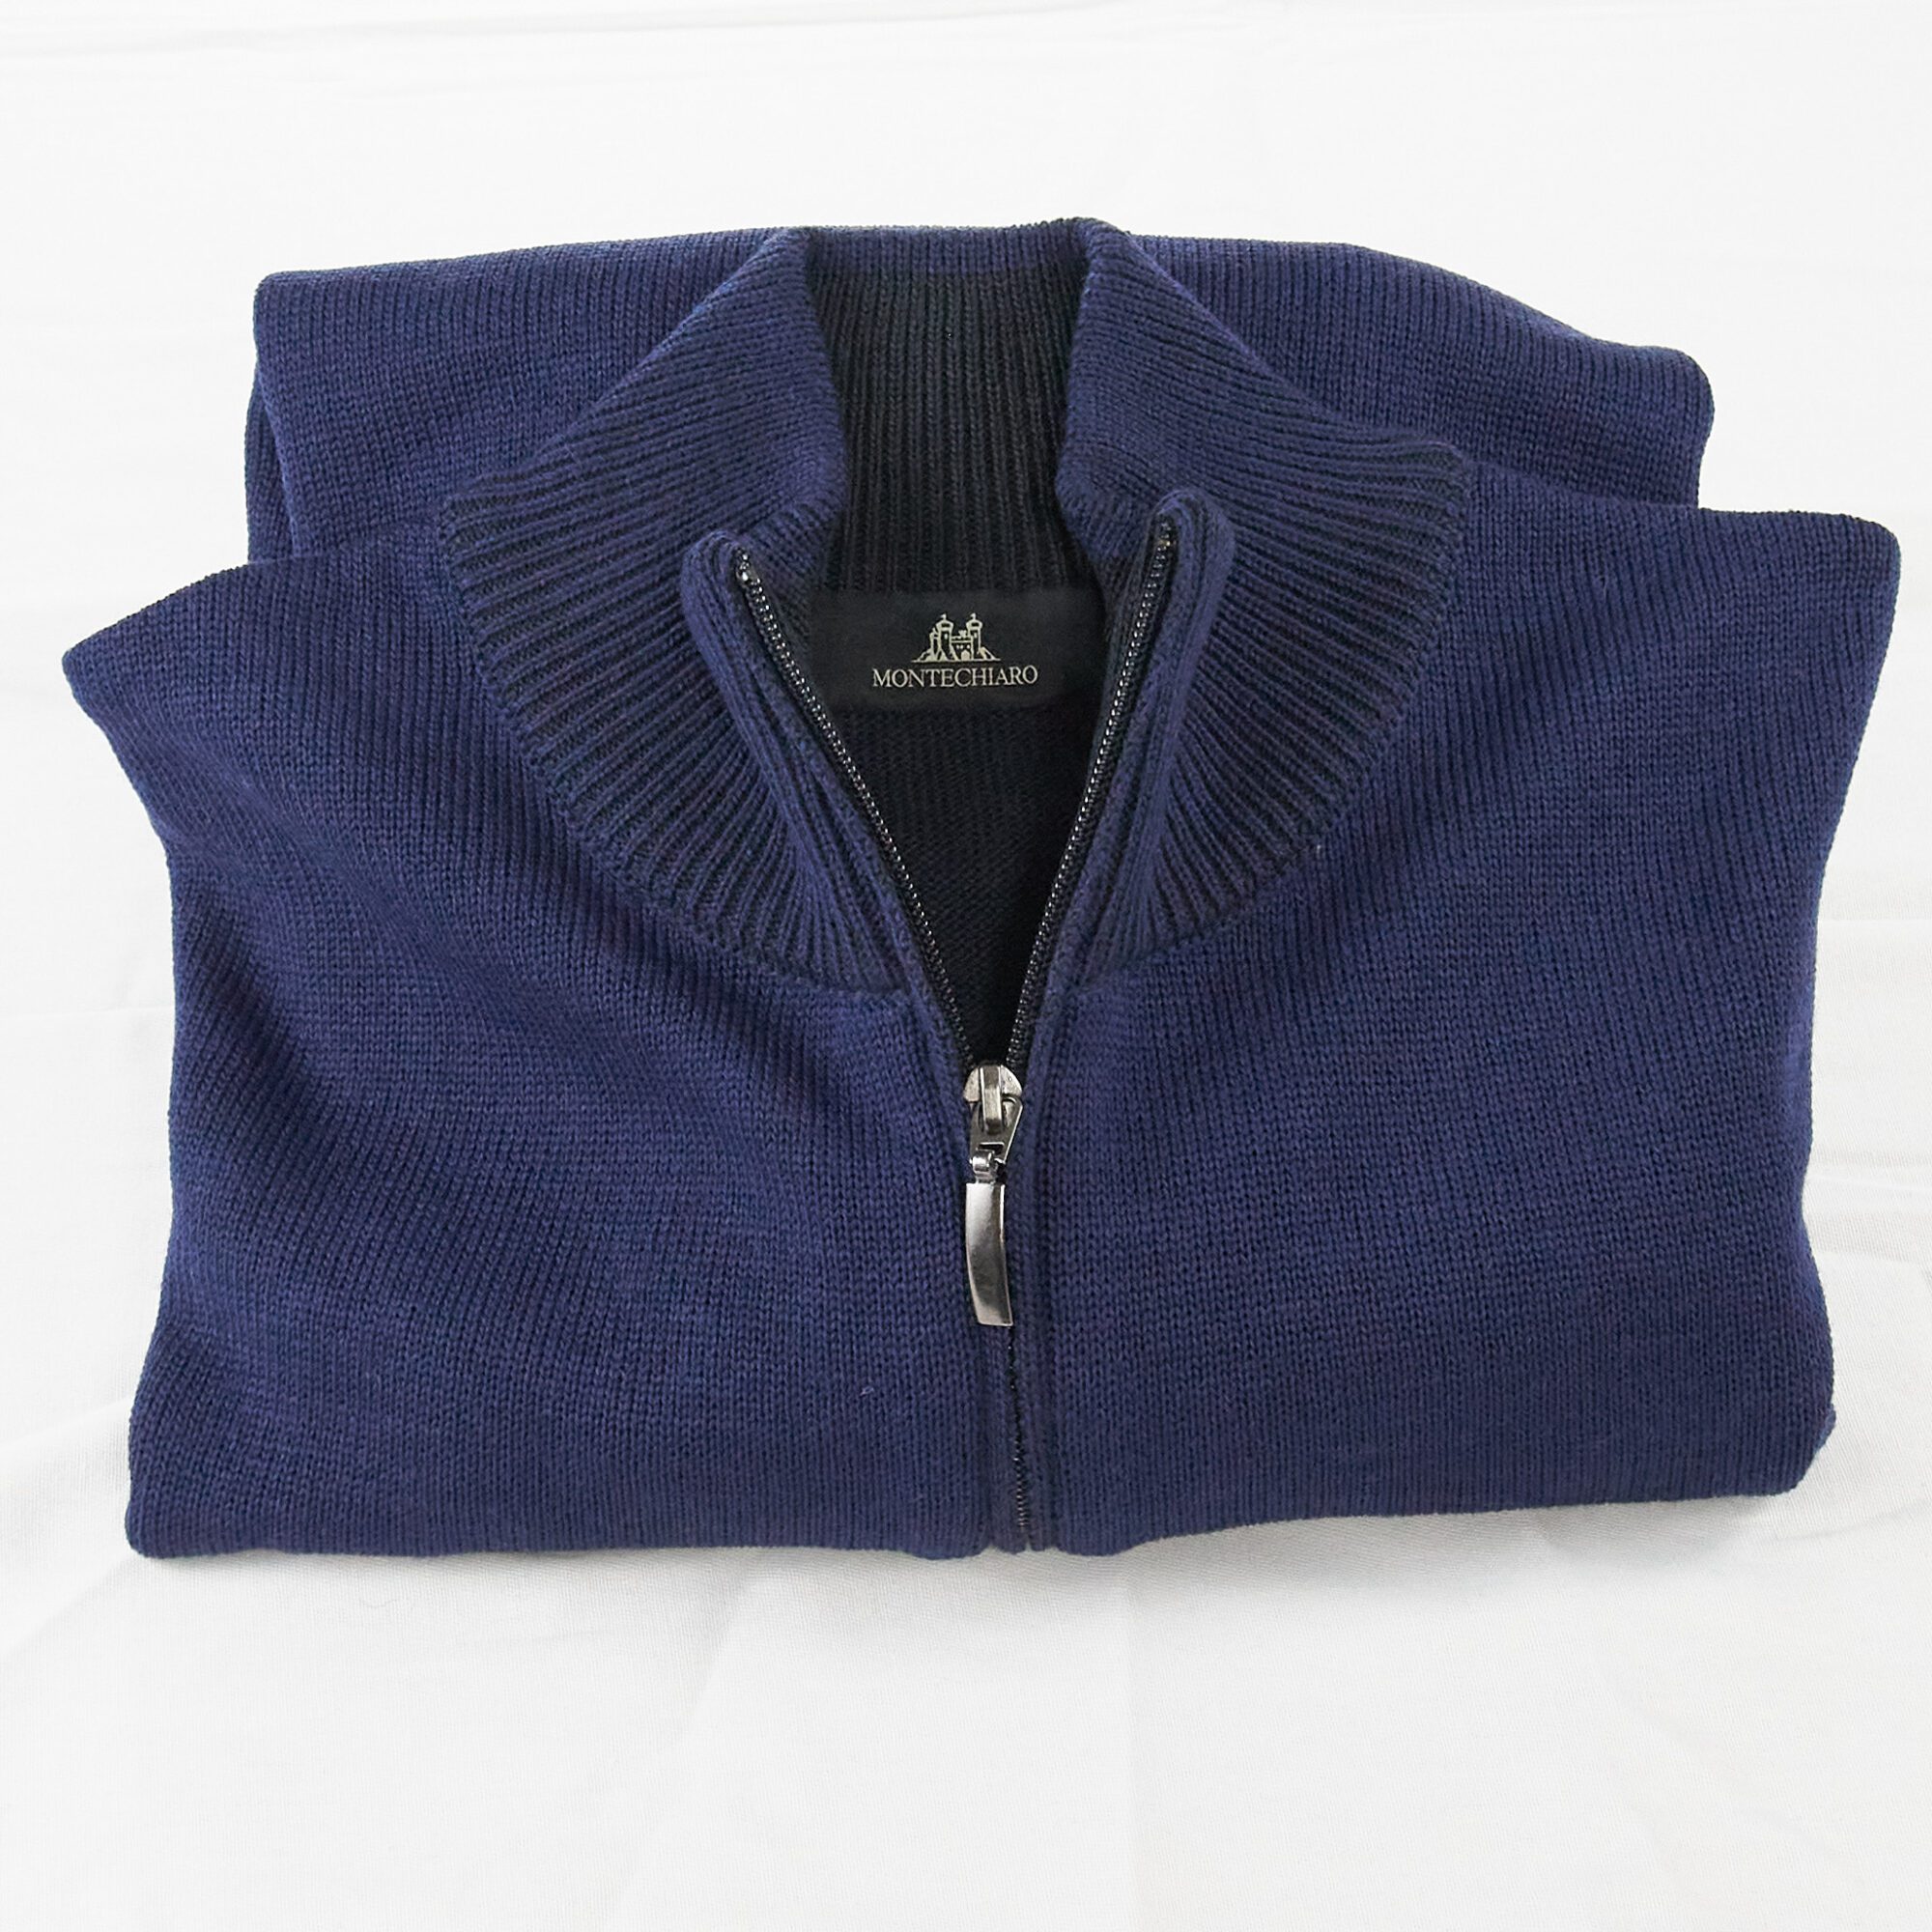 Montechiaro zip in dark blue, luxury Italian knitwear, beautifully designed and made. From Gabucci Bath.